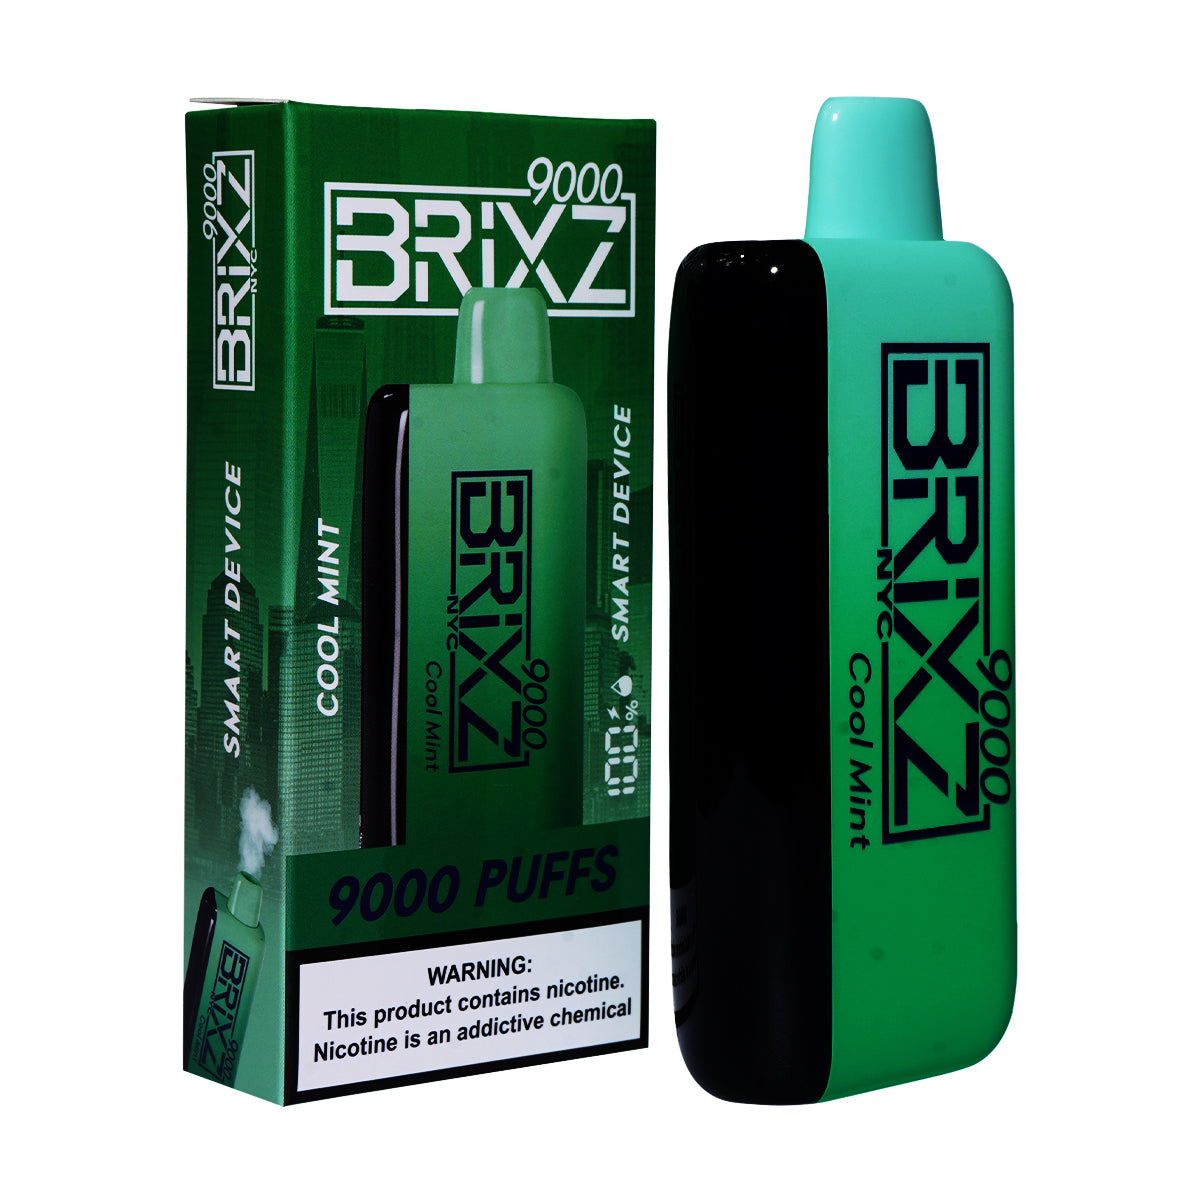 Brixz Bar 9000 Puff - Cool Mint